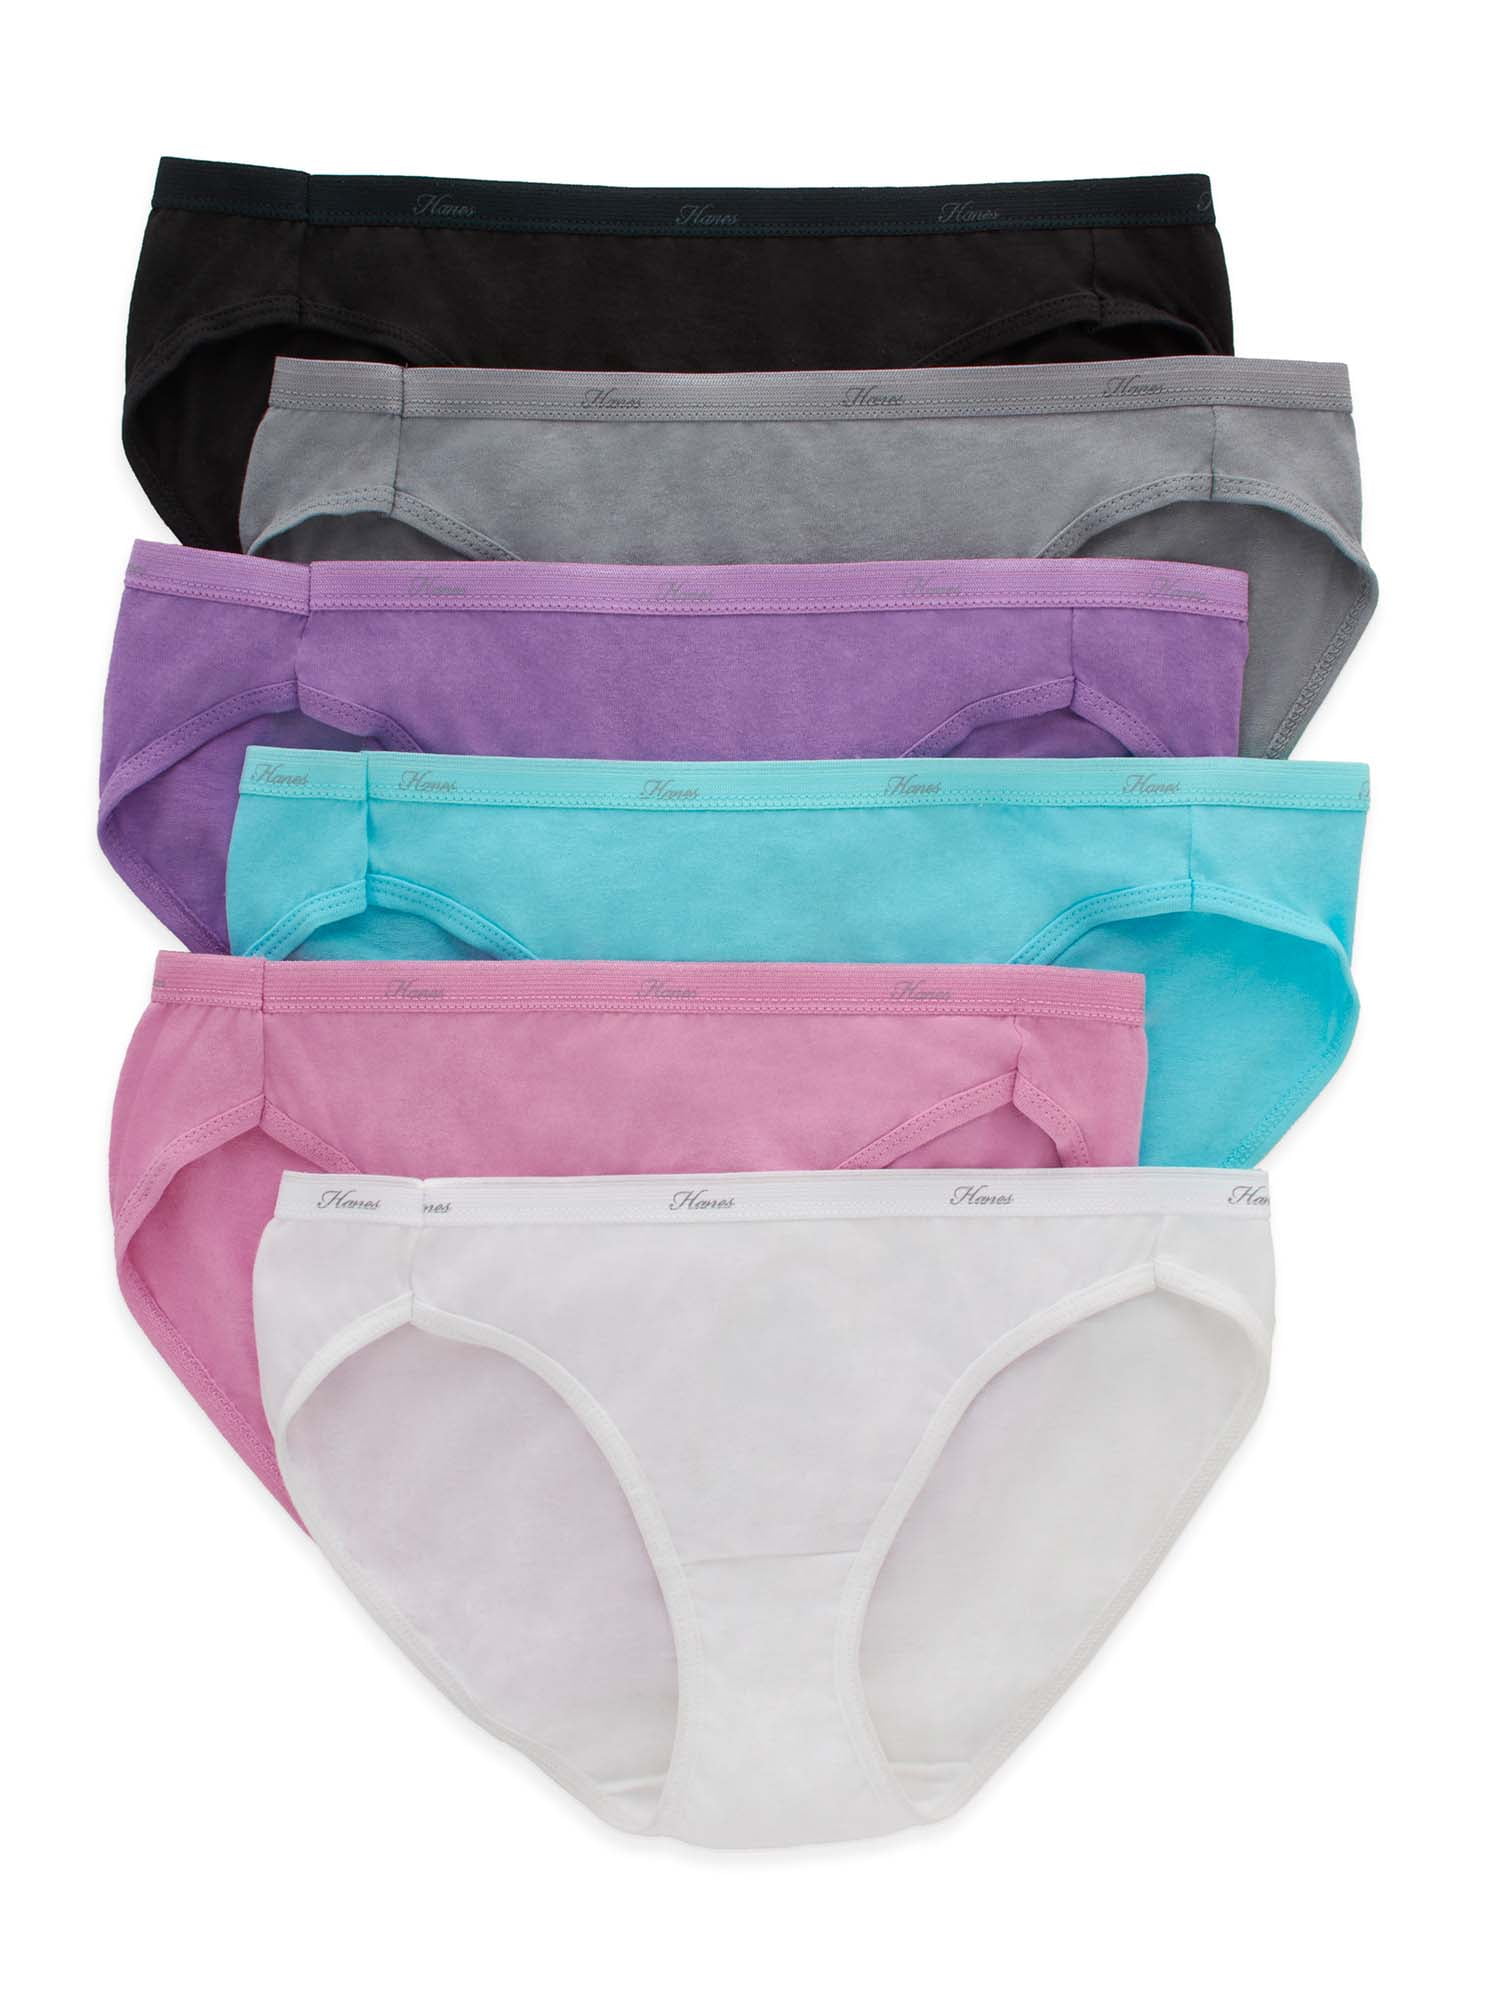 Hanes Women's Comfort, Period Moderate Leak Protection Brief Underwear, 3  Pack